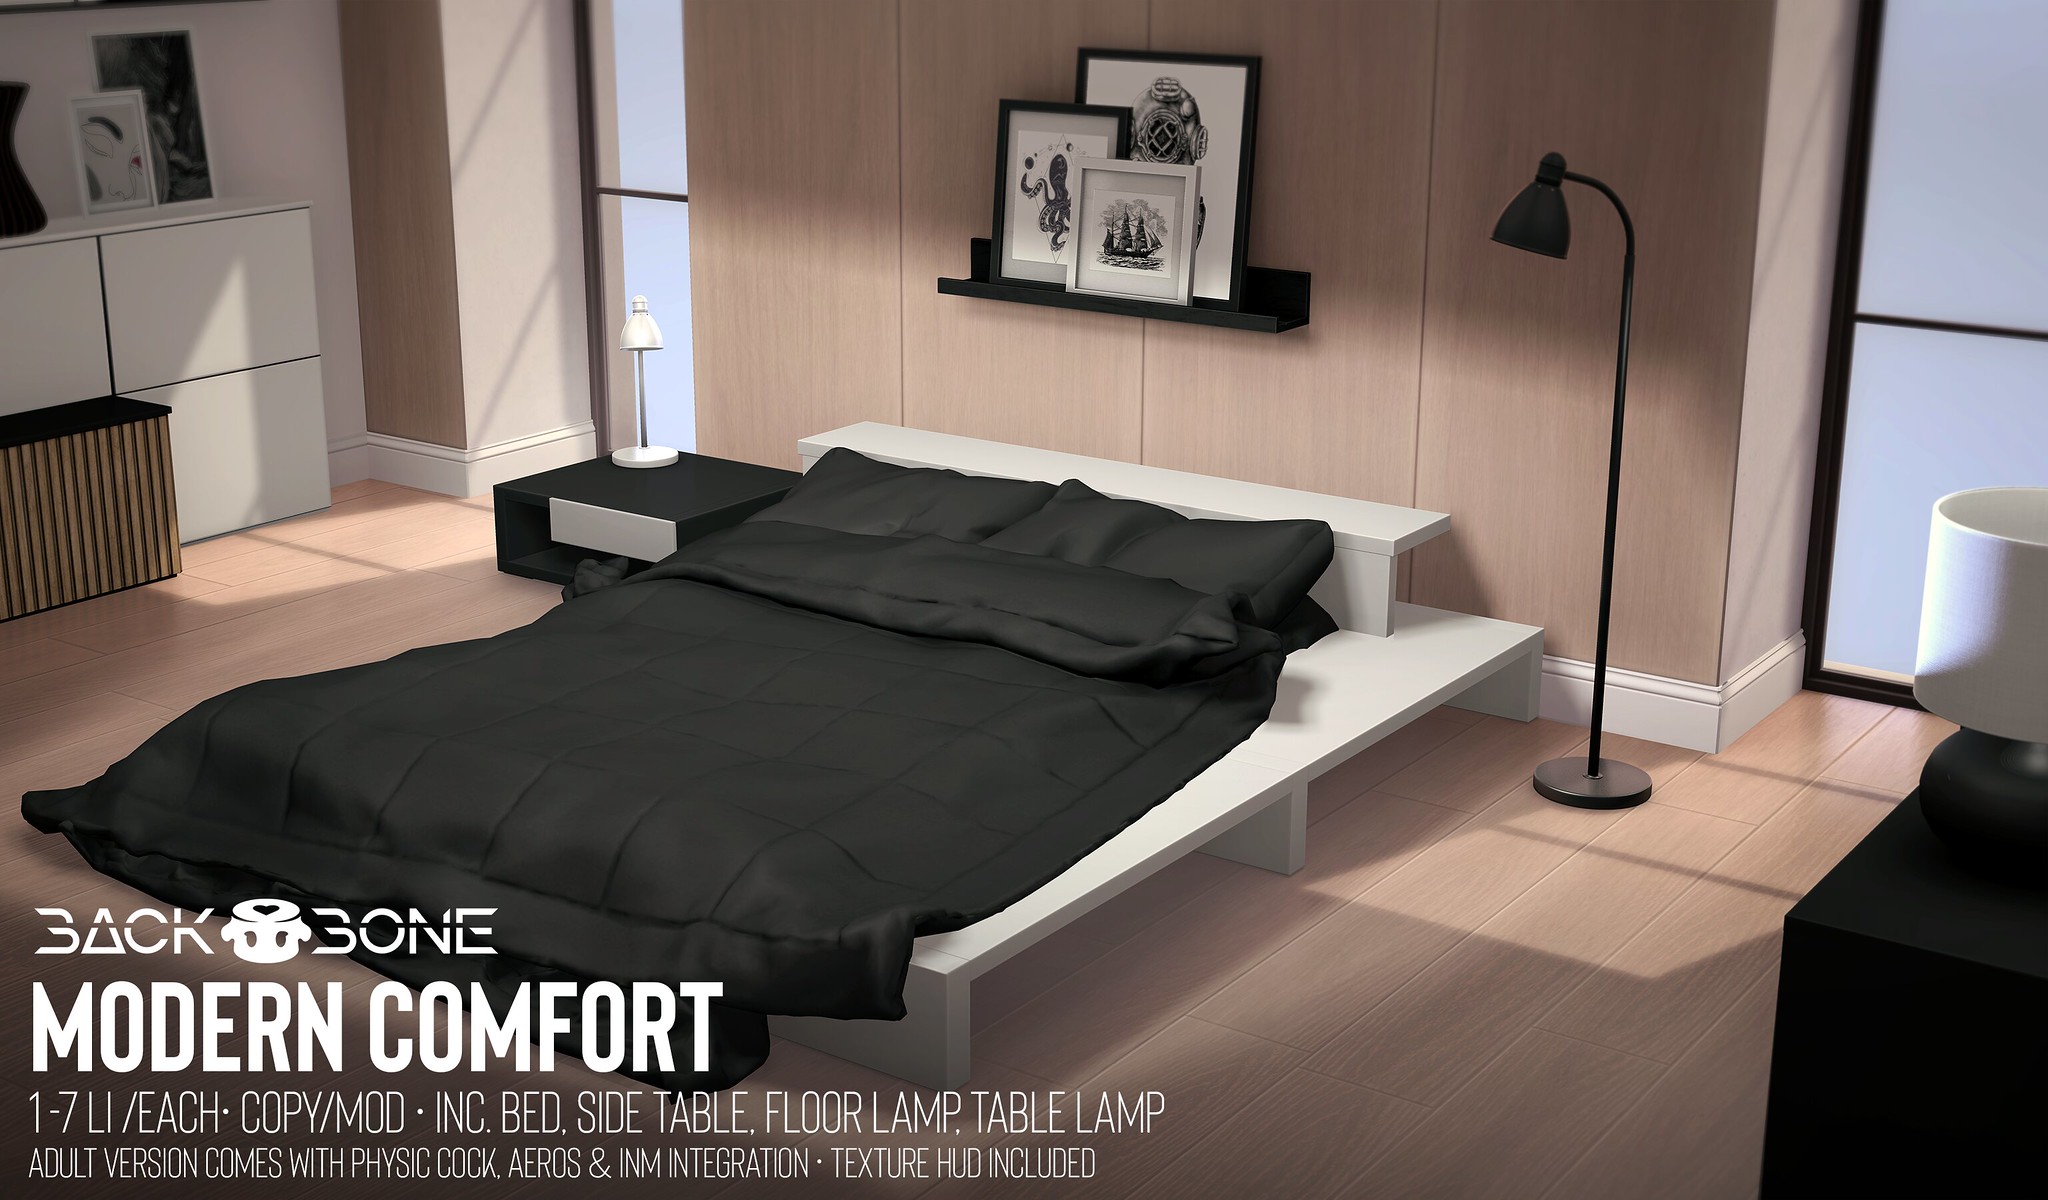 BackBone – Modern Comfort